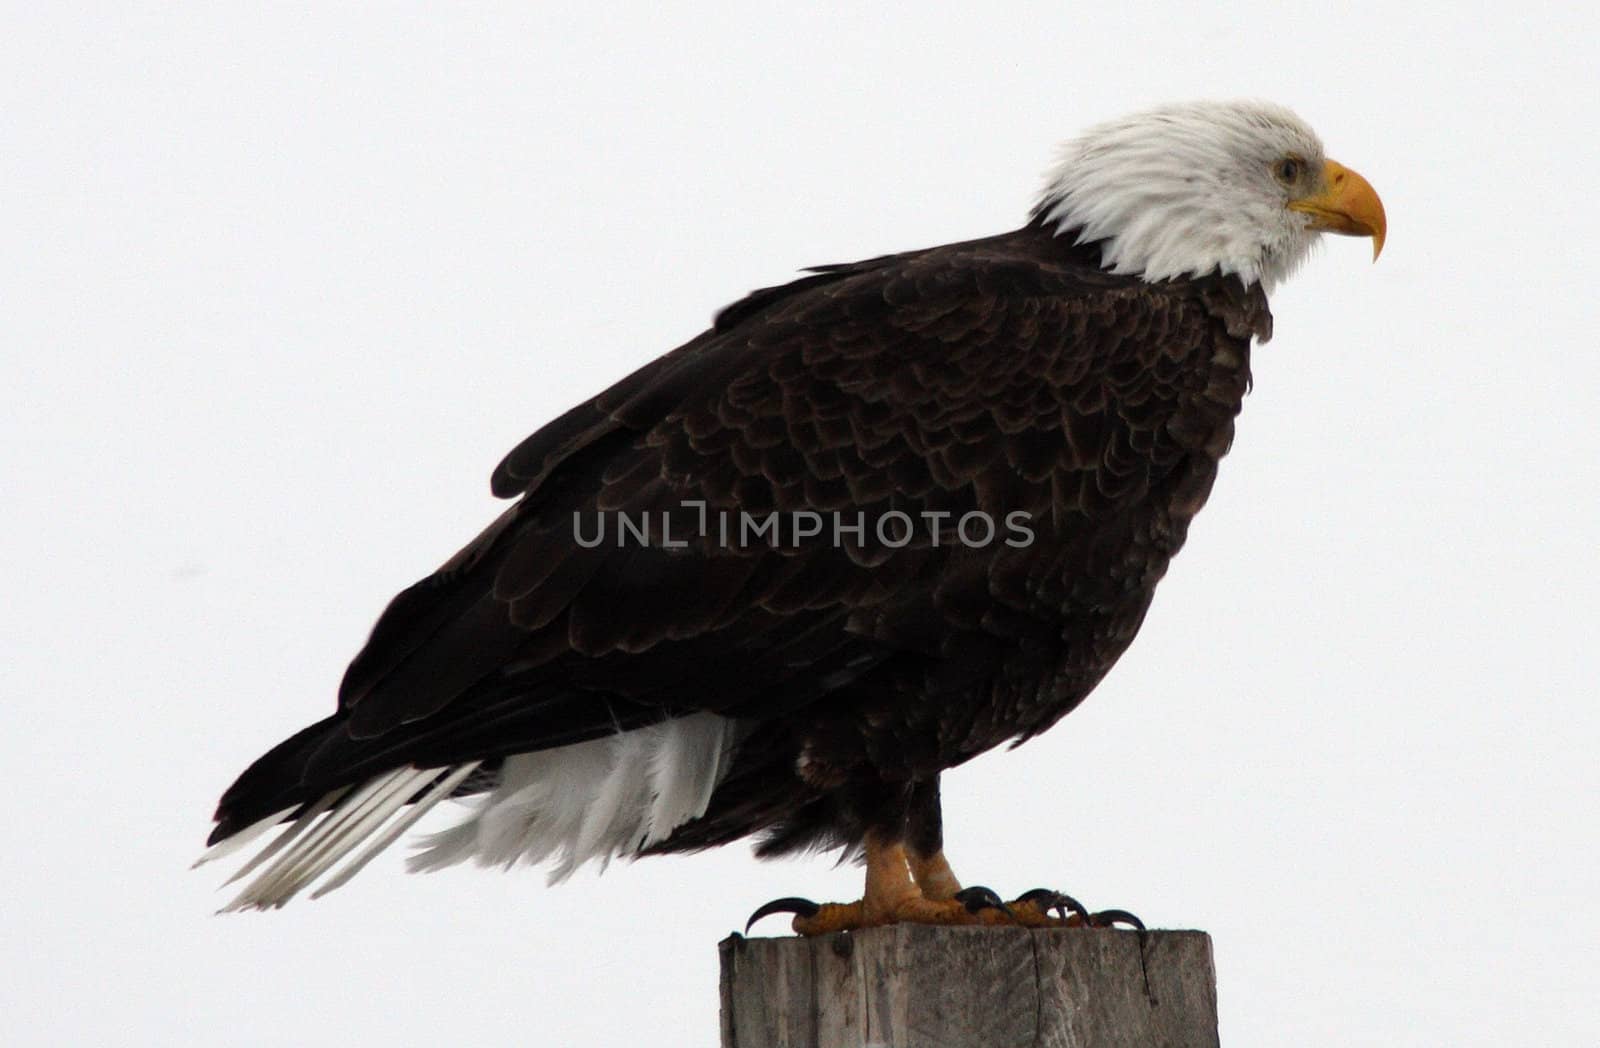 Bald Eagle.  Photo taken at Lower Klamath National Wildlife Refuge, CA.